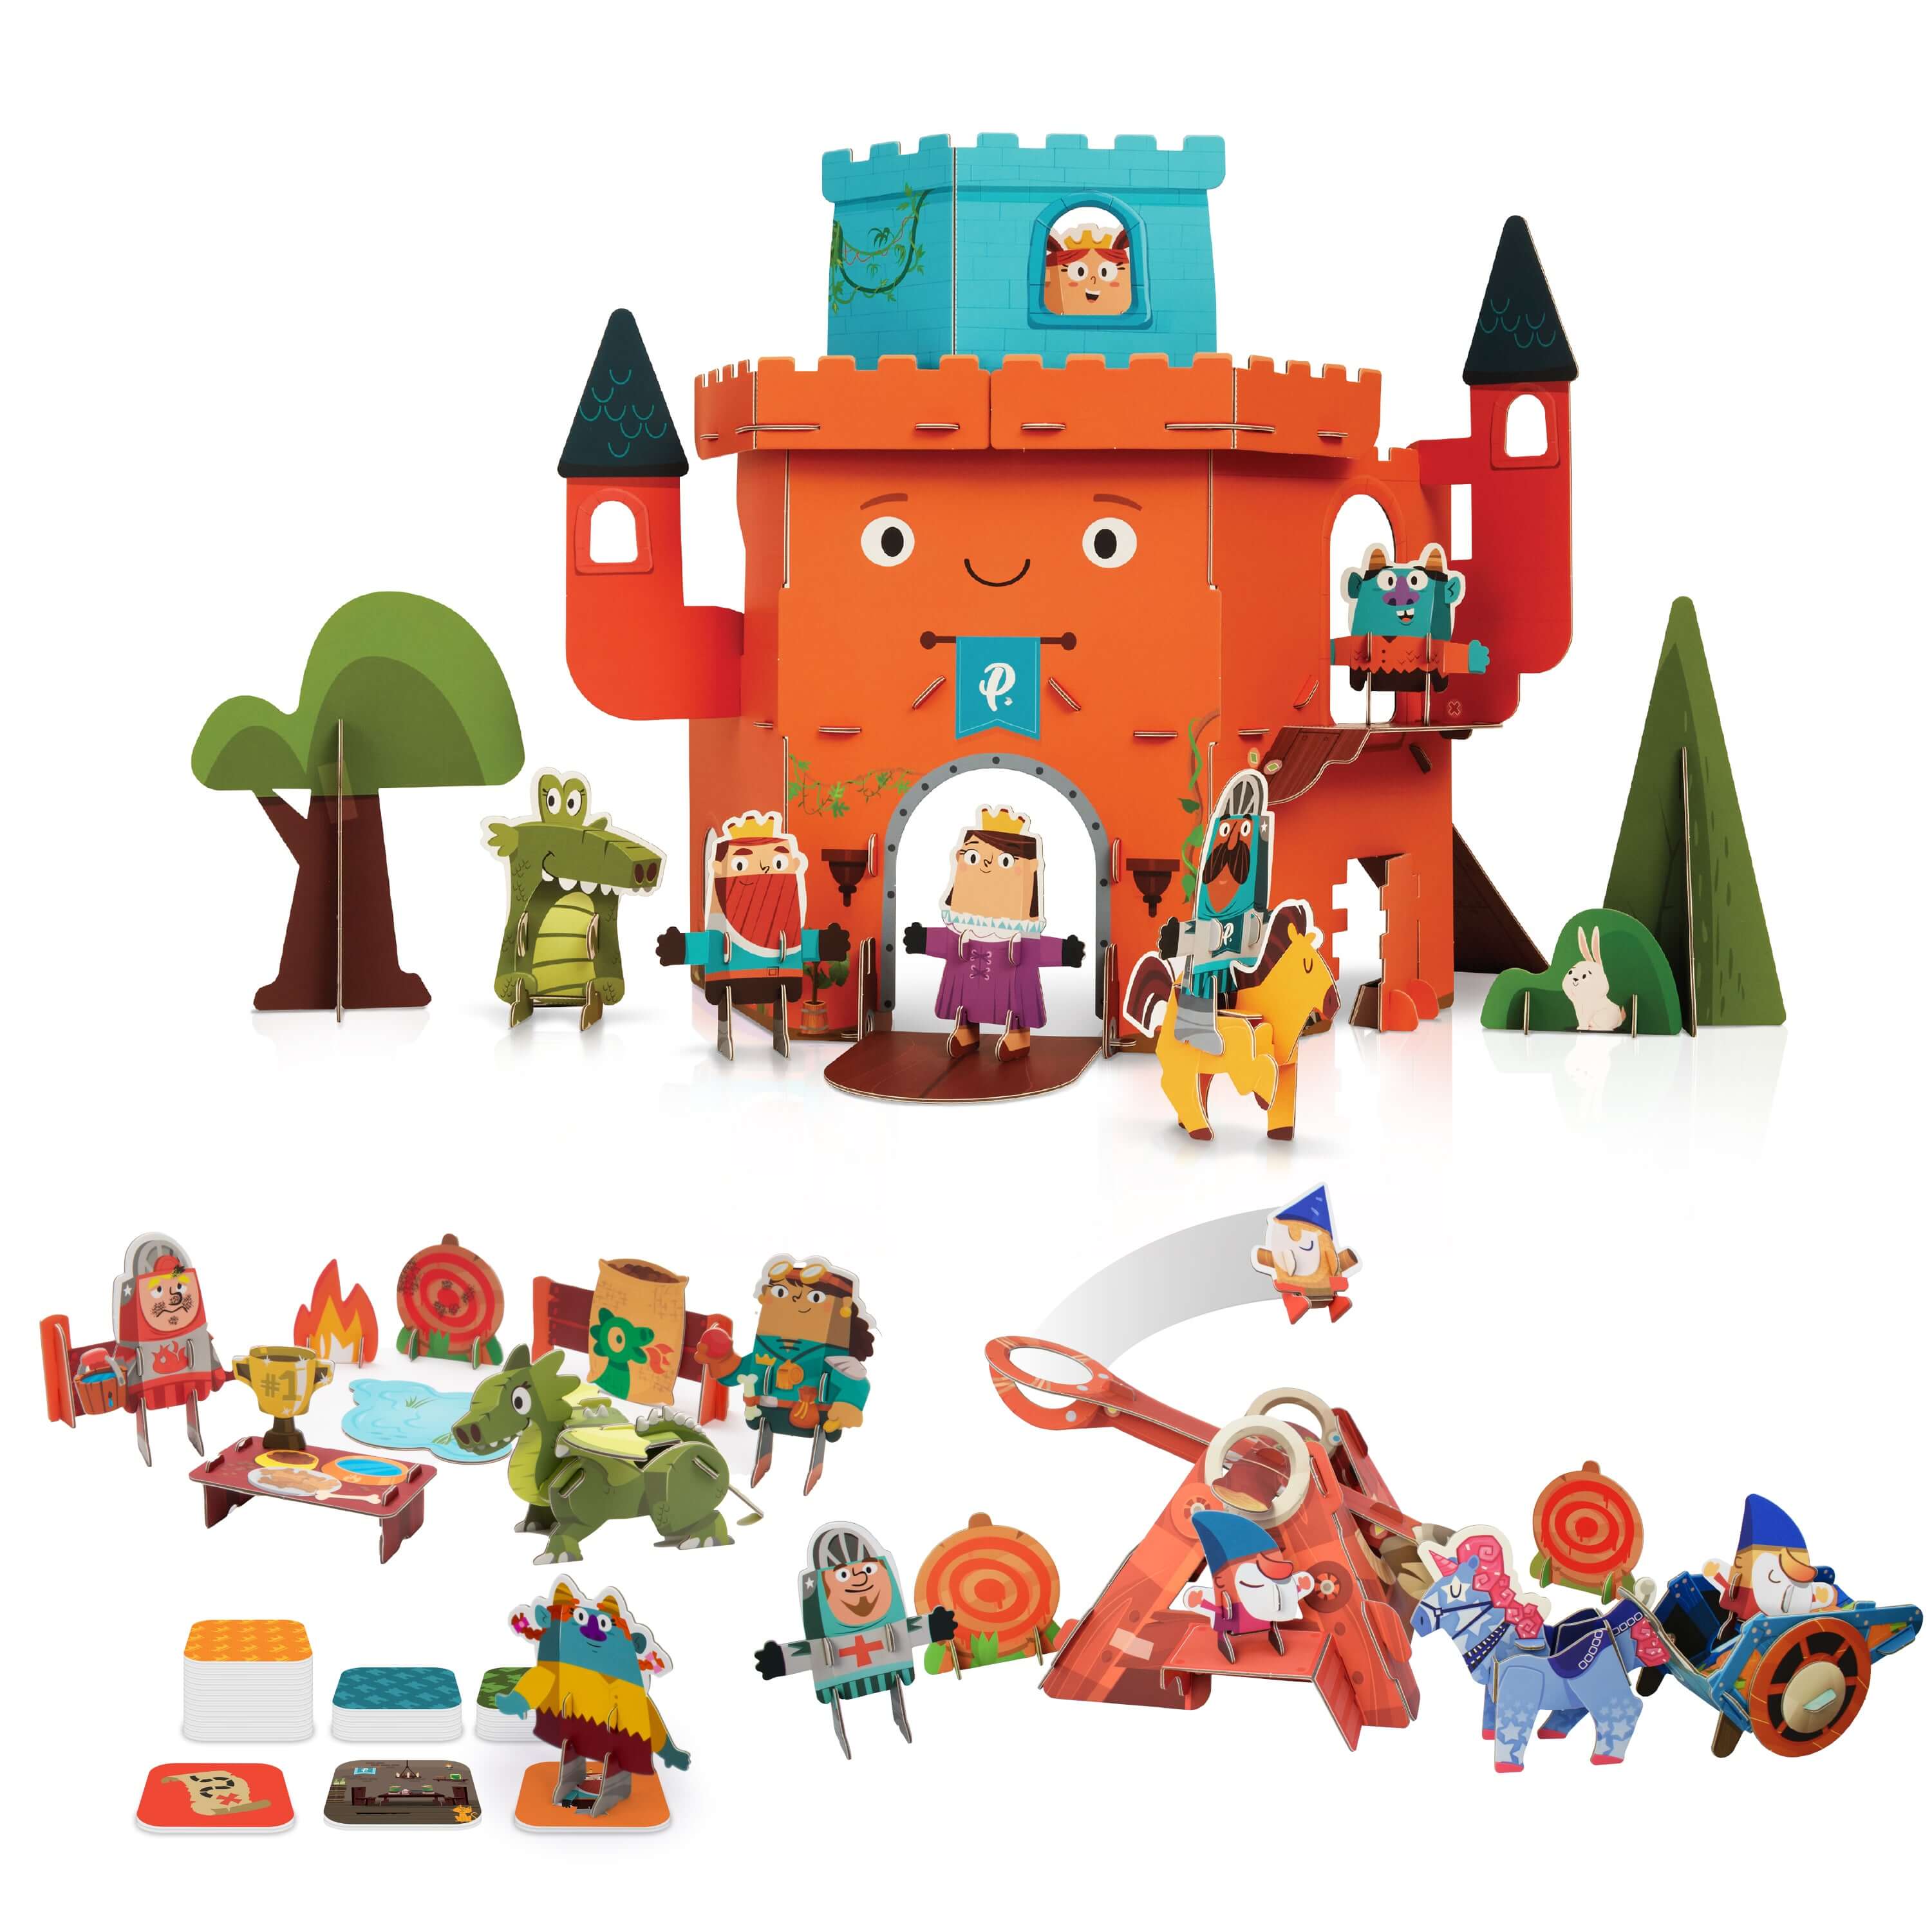 Get the Entire Playper Curious Kingdom Castle Playset